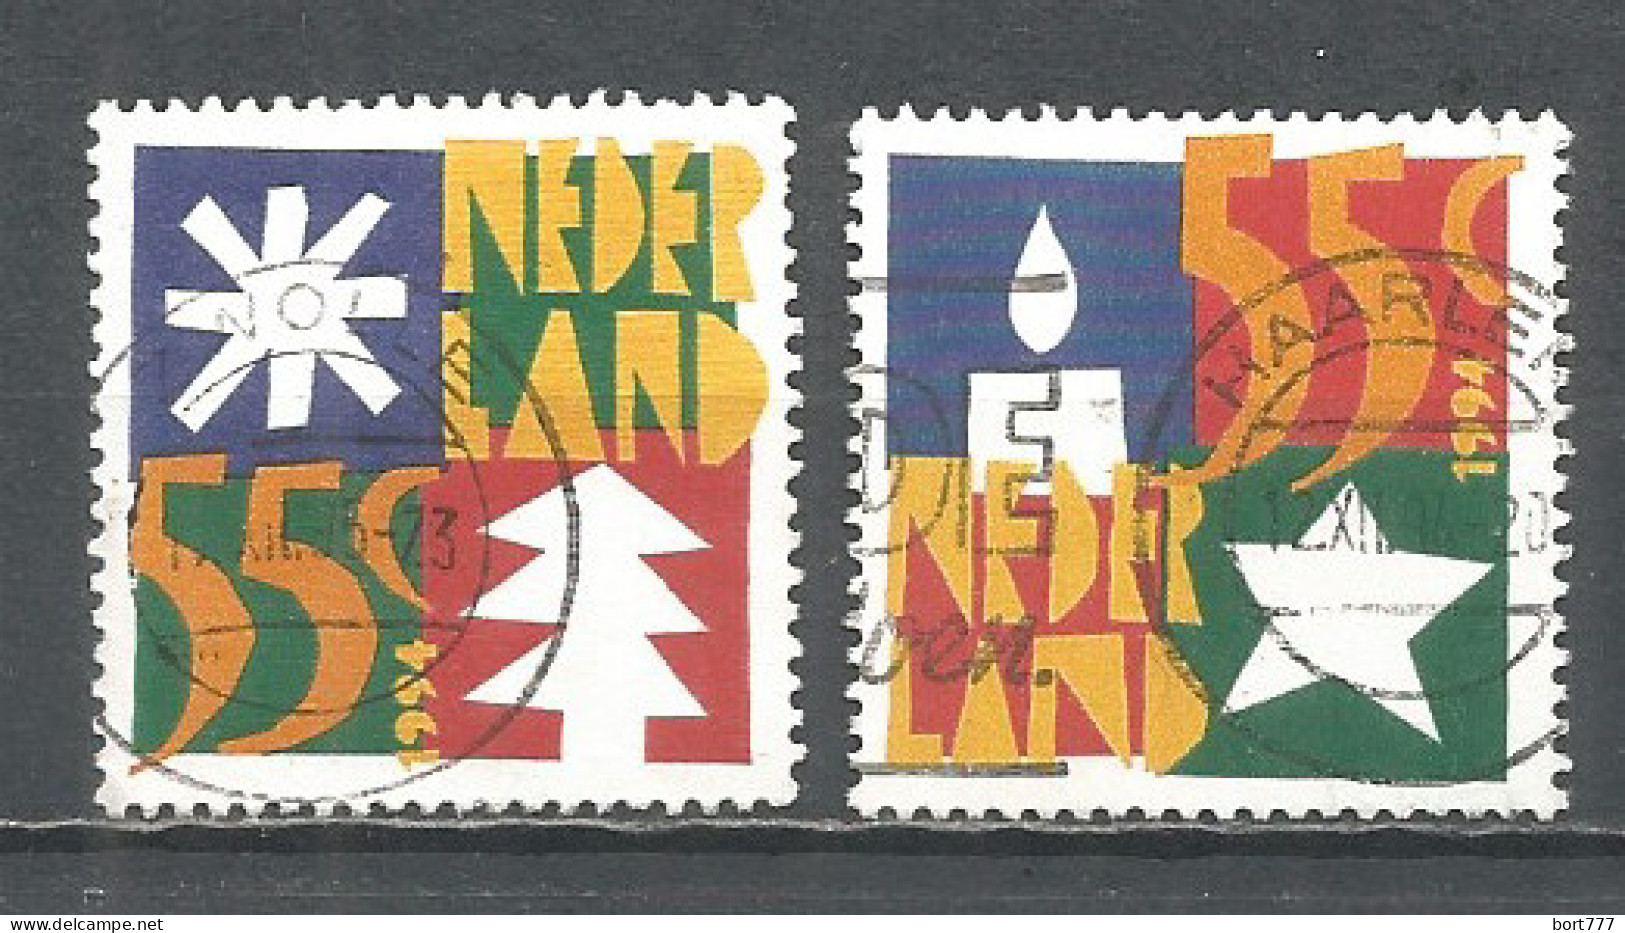 Netherlands 1994 Year, Used Stamps ,Mi 1528-29 - Usados